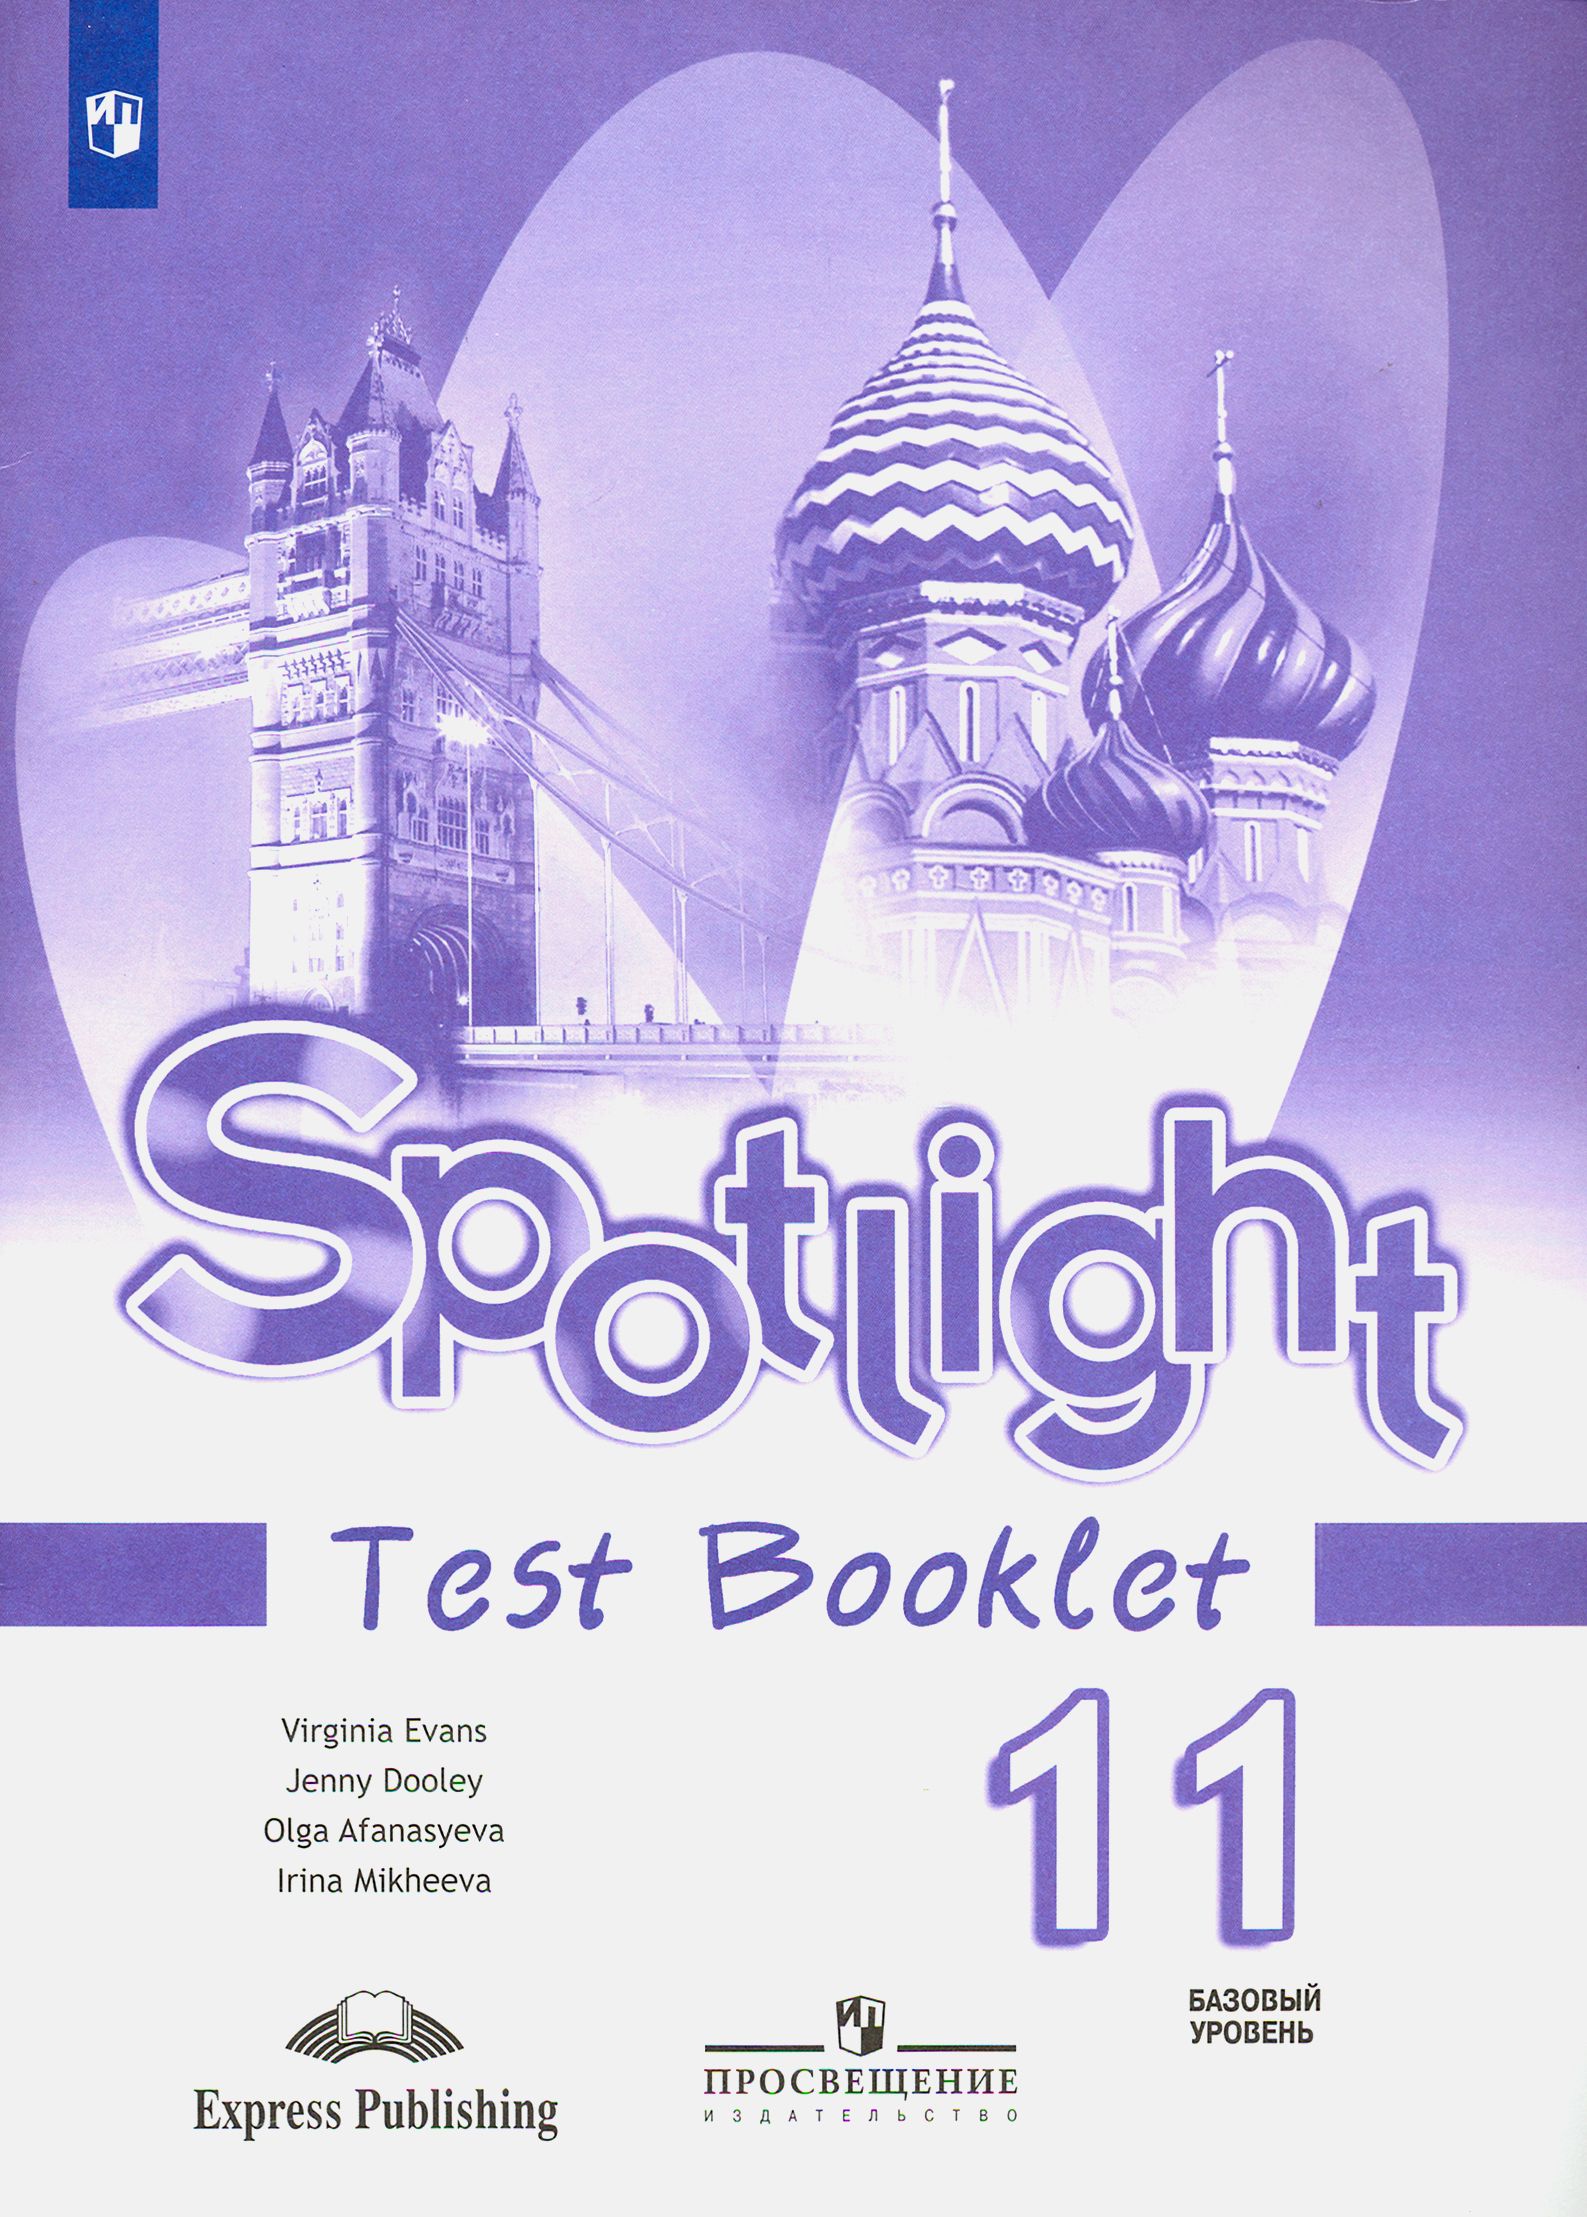 Английский 11 класс spotlight 2019. Test booklet 9 класс Spotlight ваулина. Английский язык 9 класс ваулина тест буклет. Спотлайт 11 класс тест буклет. Спотлайт 9 класс тест буклет.